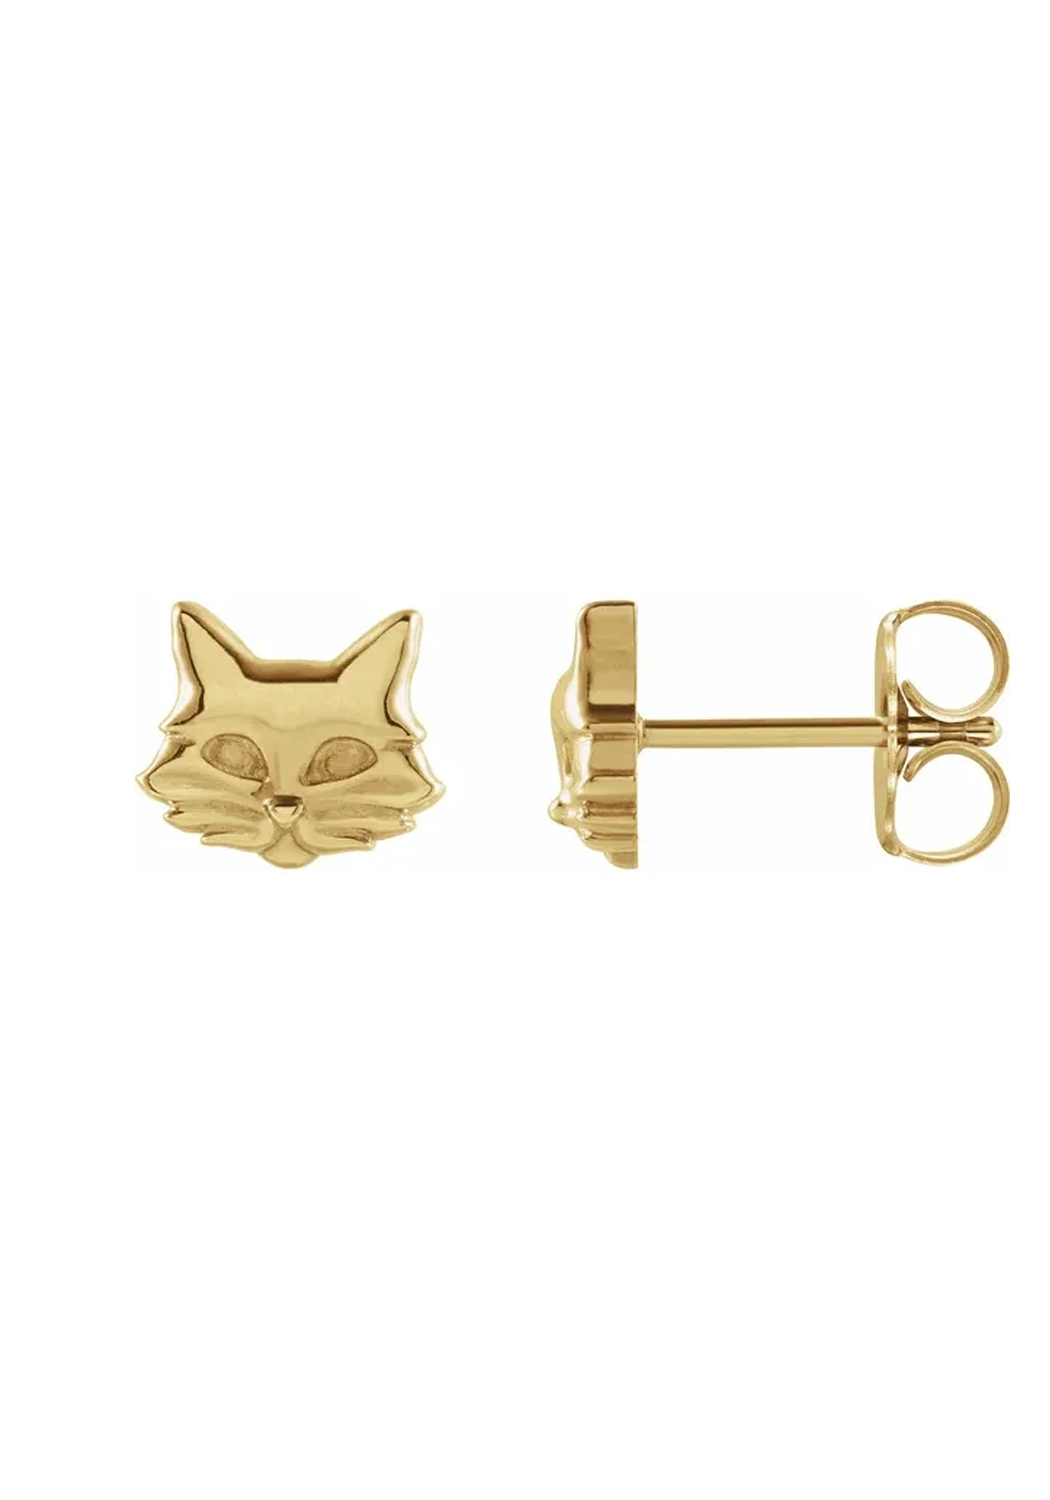 14K Yellow Gold Cat Stud Earrings | OsterJewelers.com